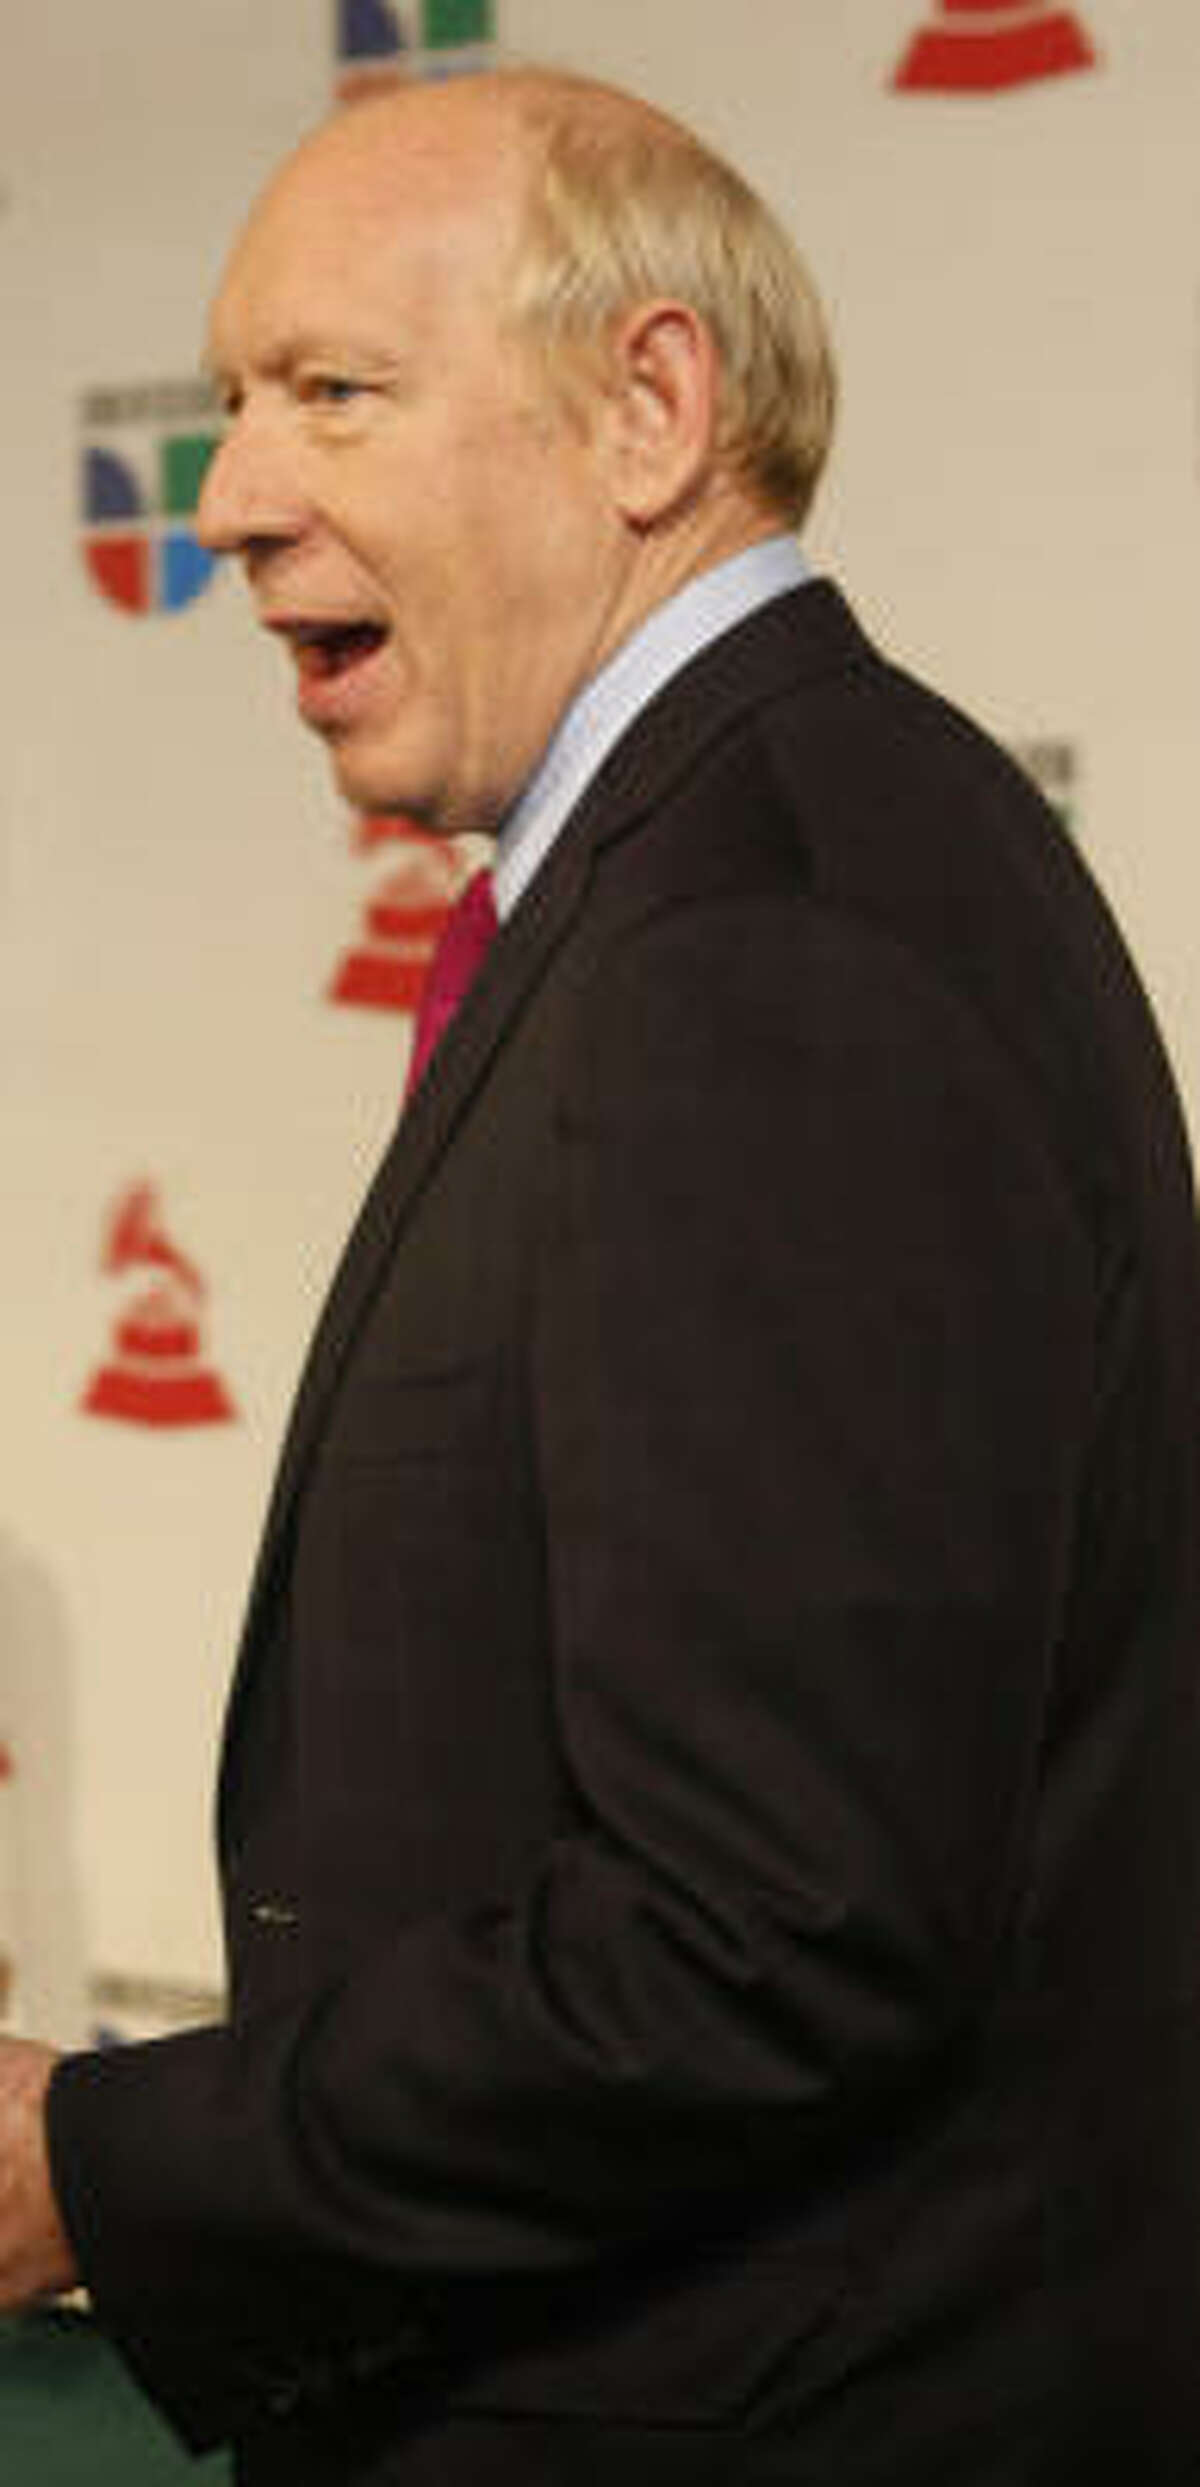 Mayor Bill White served as deputy energy secretary during President Clinton's first term.